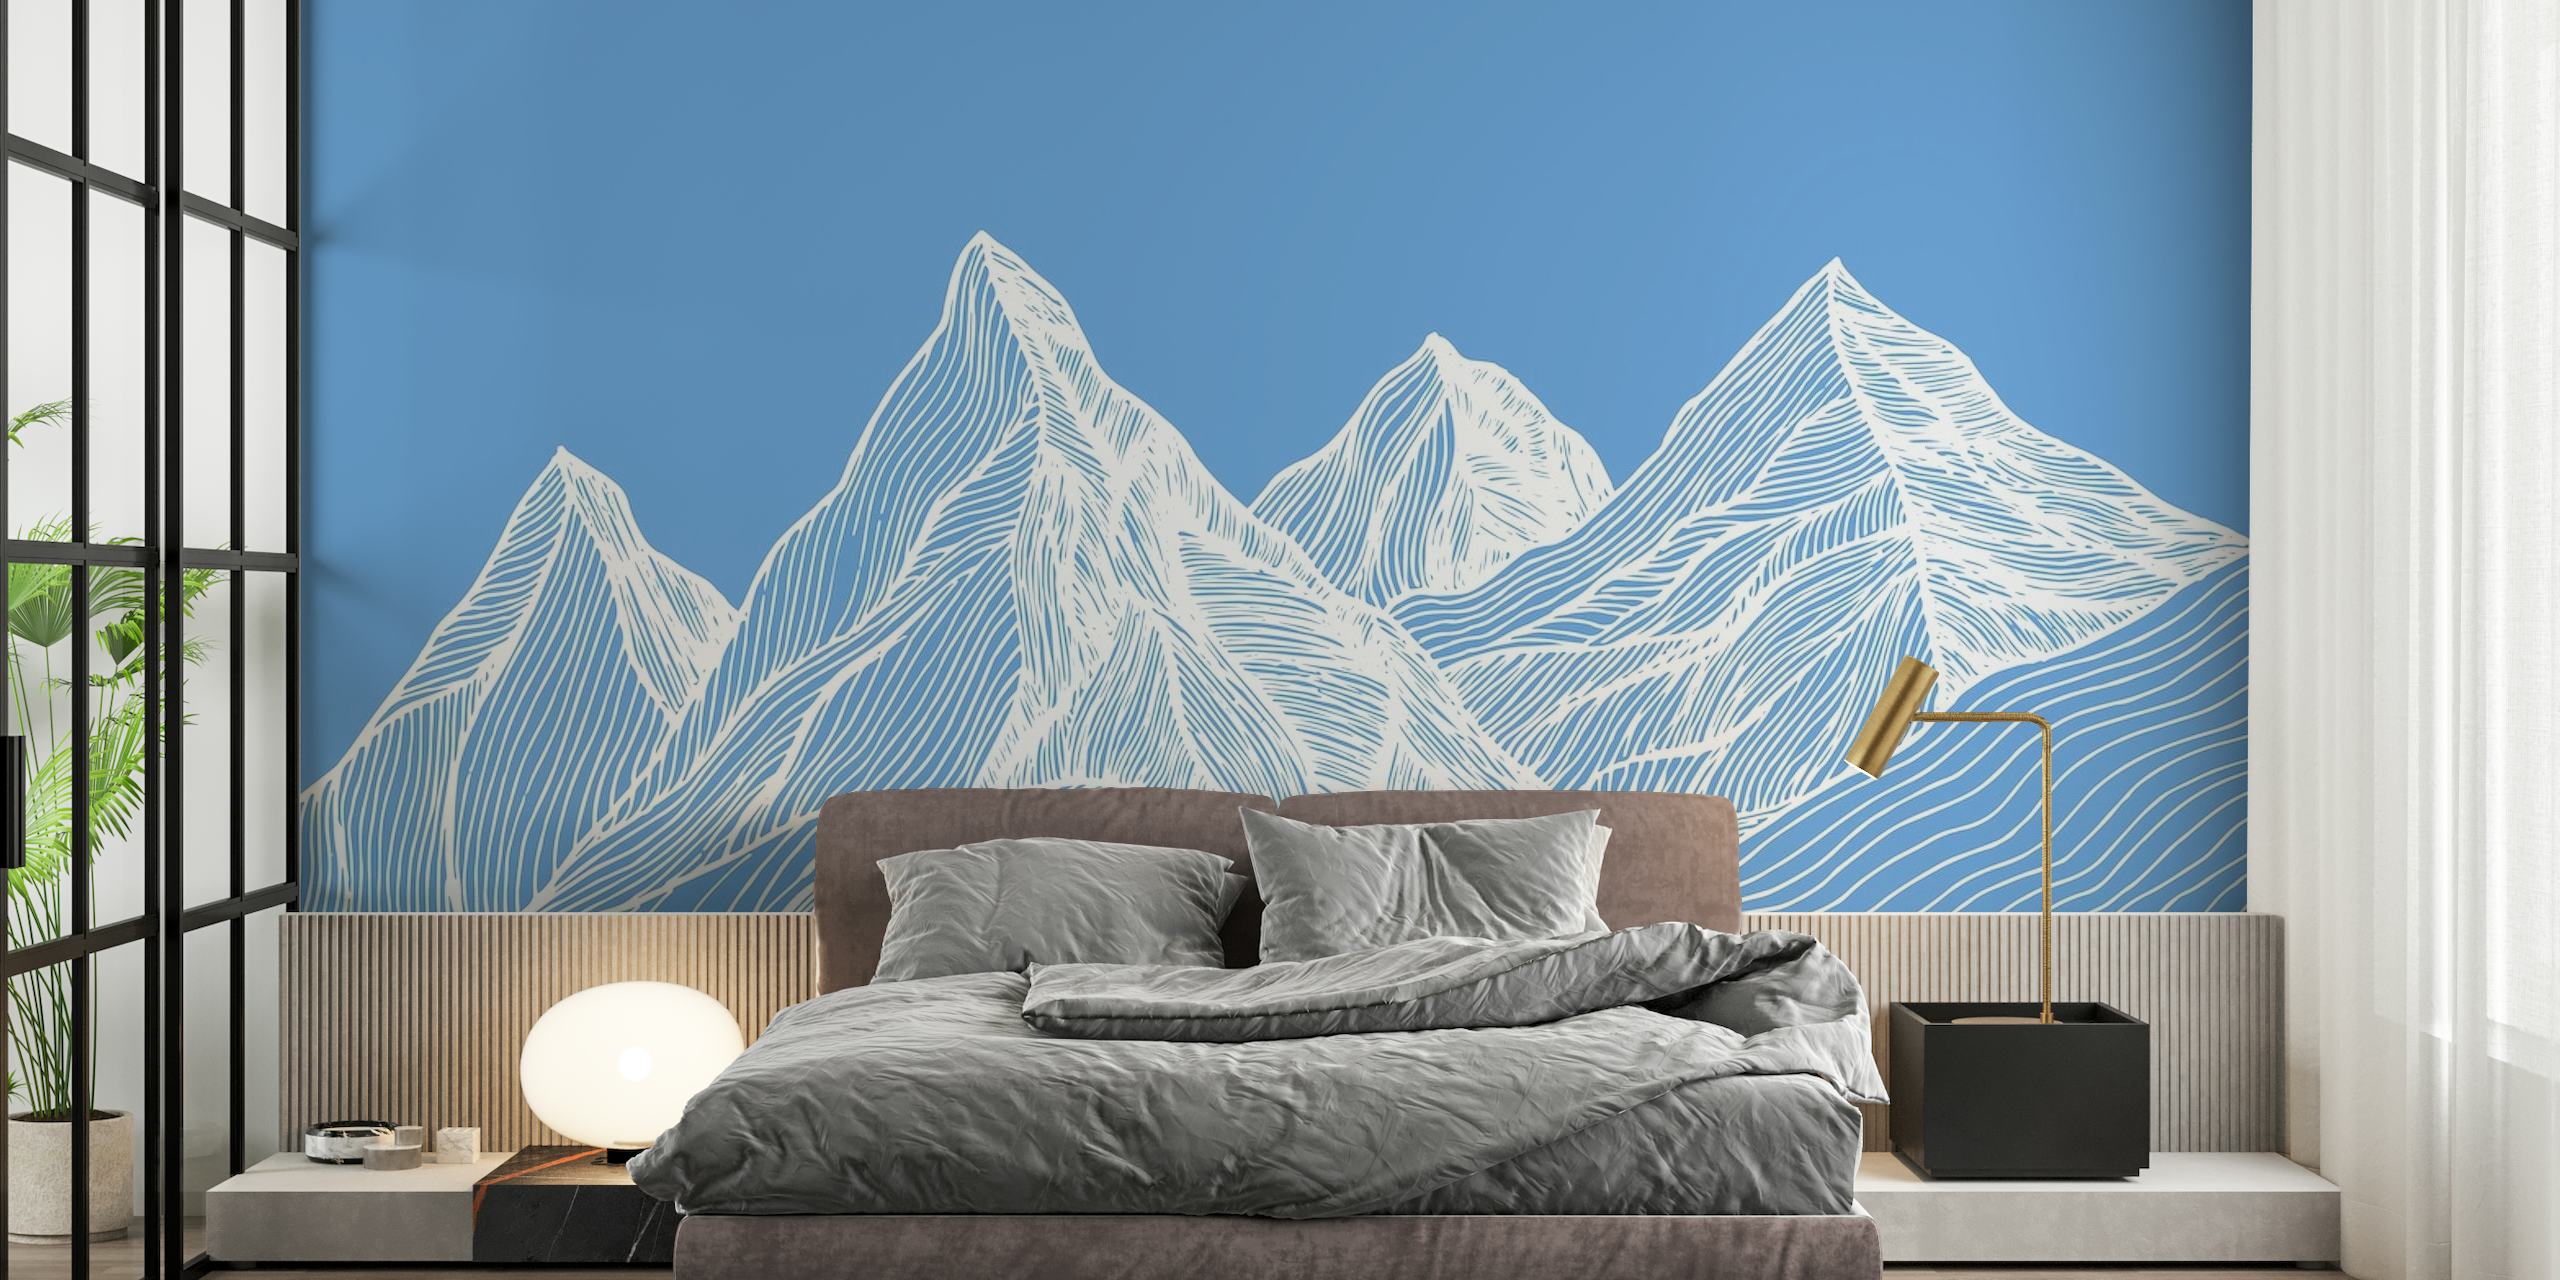 Line art mountains tapetit